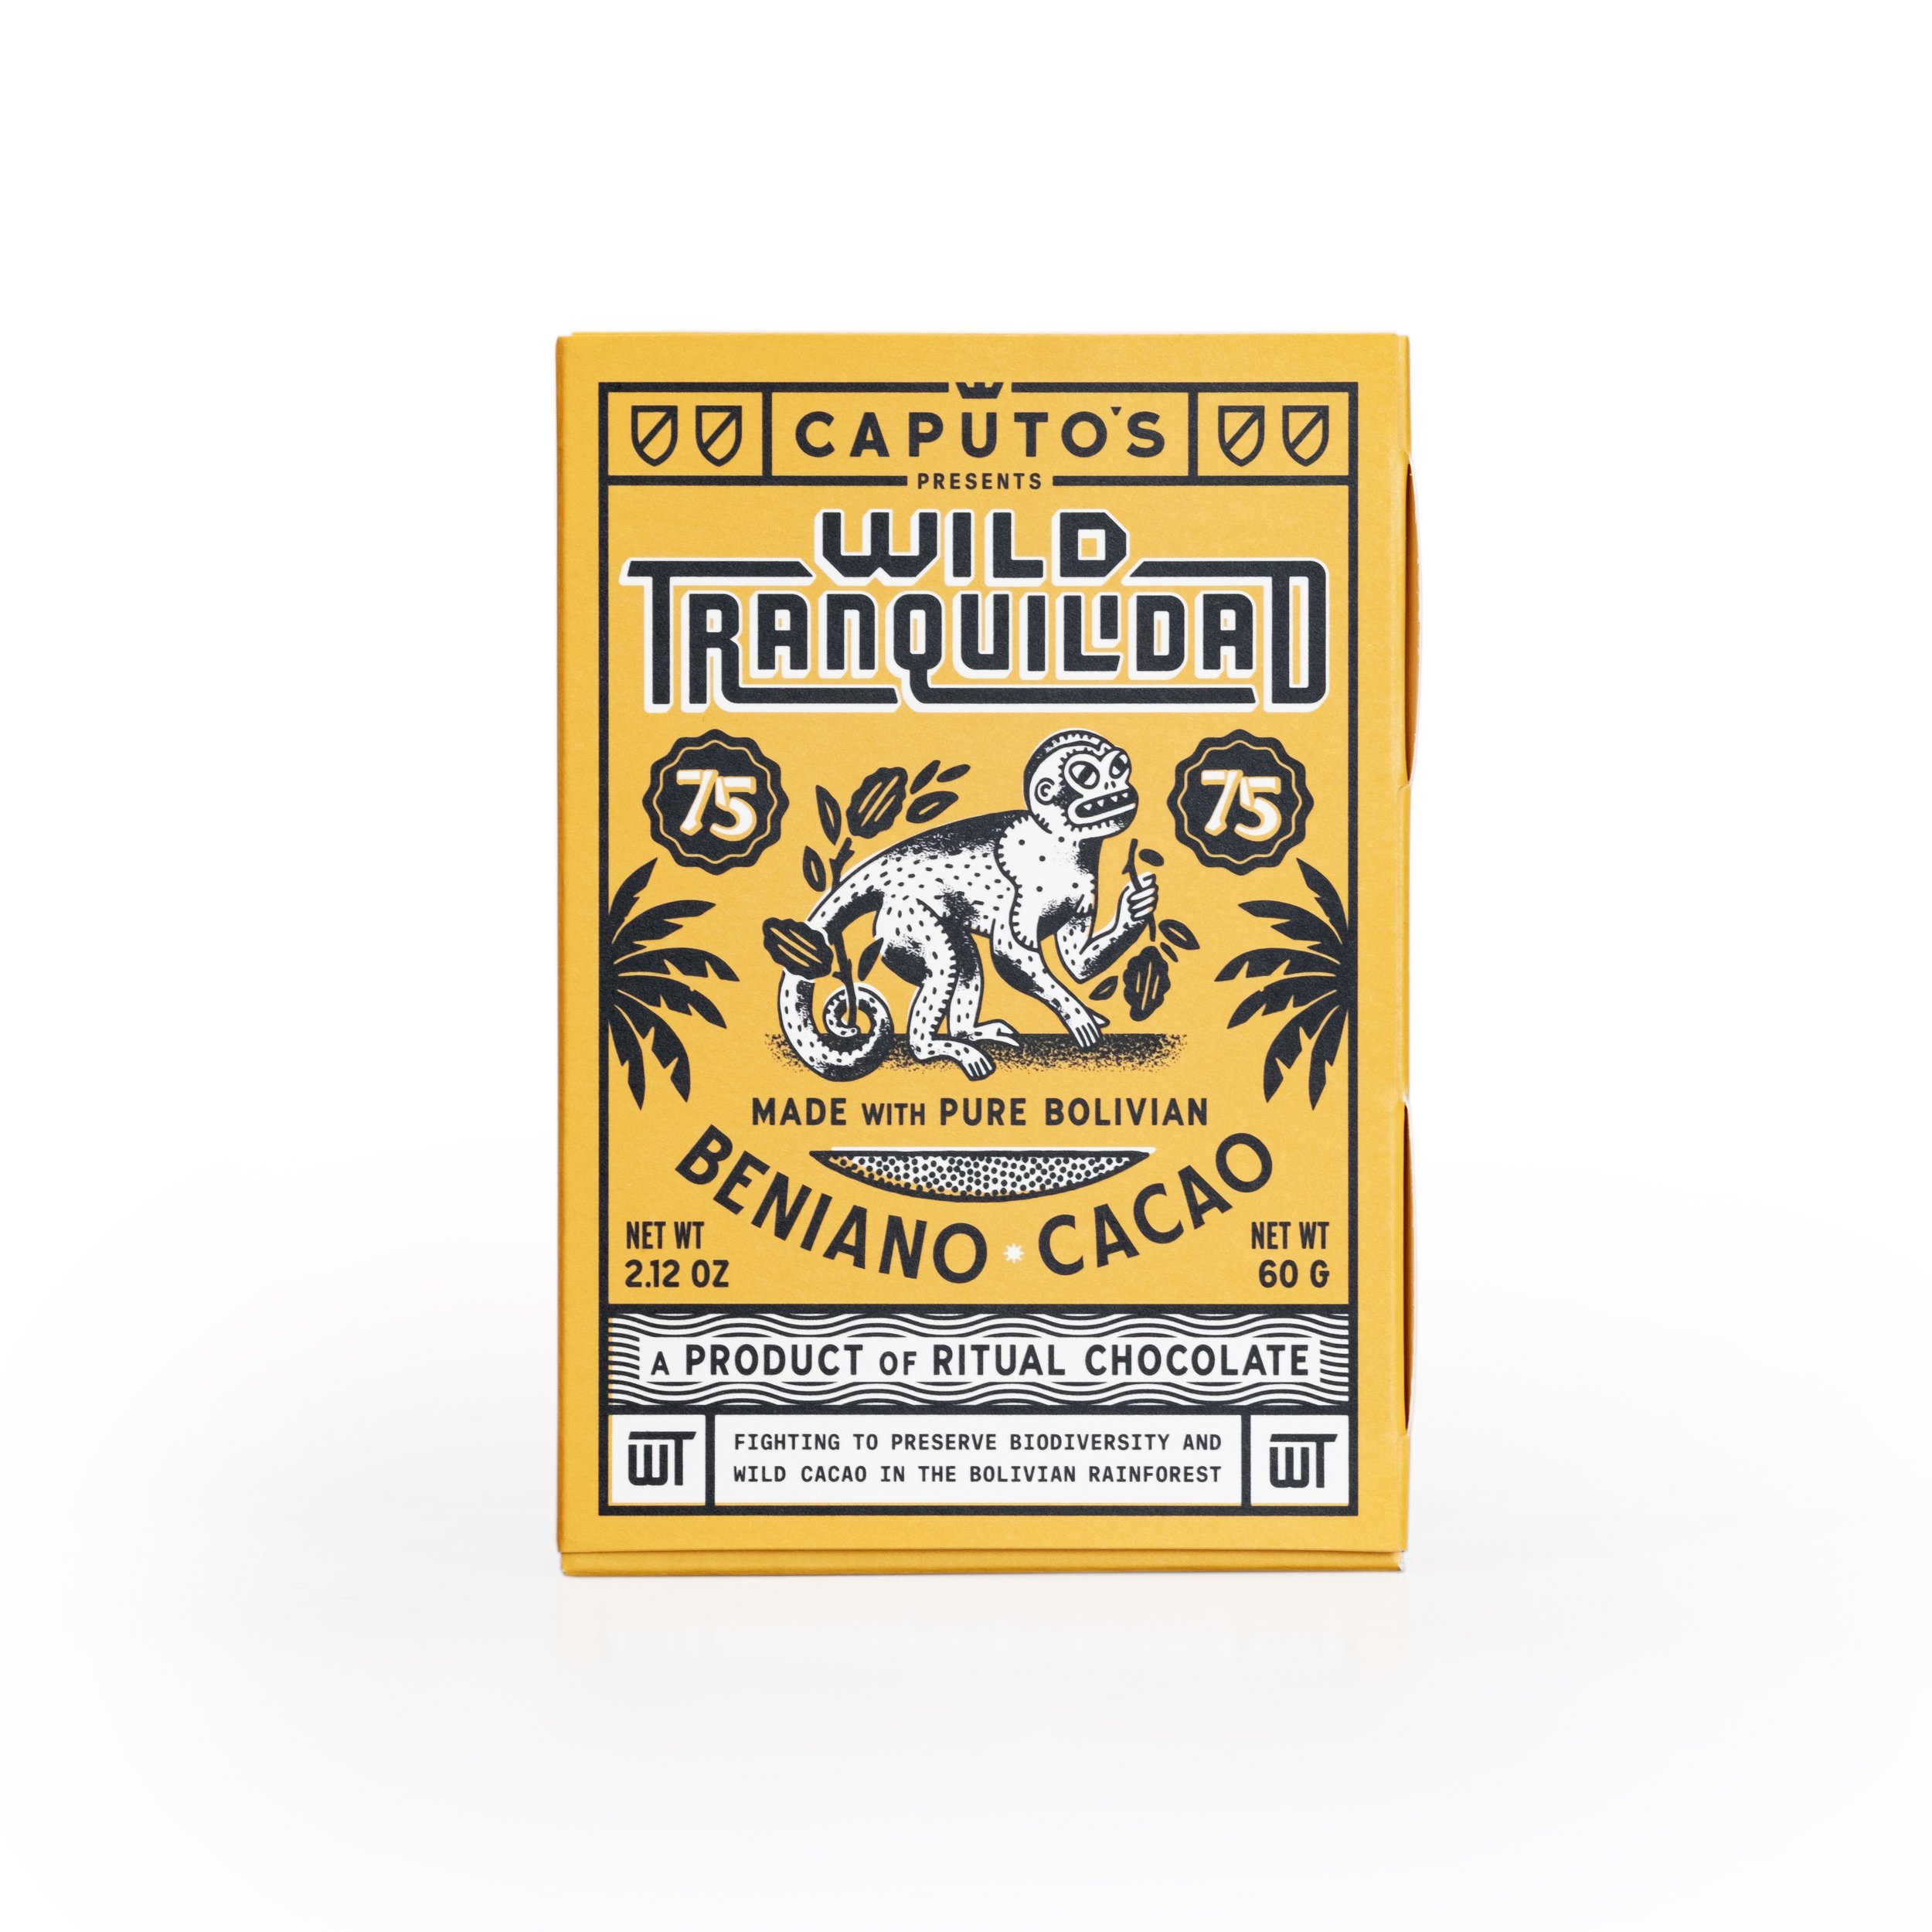 CAPUTO’S WILD TRANQUILIDAD 75% CACAO BY RITUAL CHOCOLATE